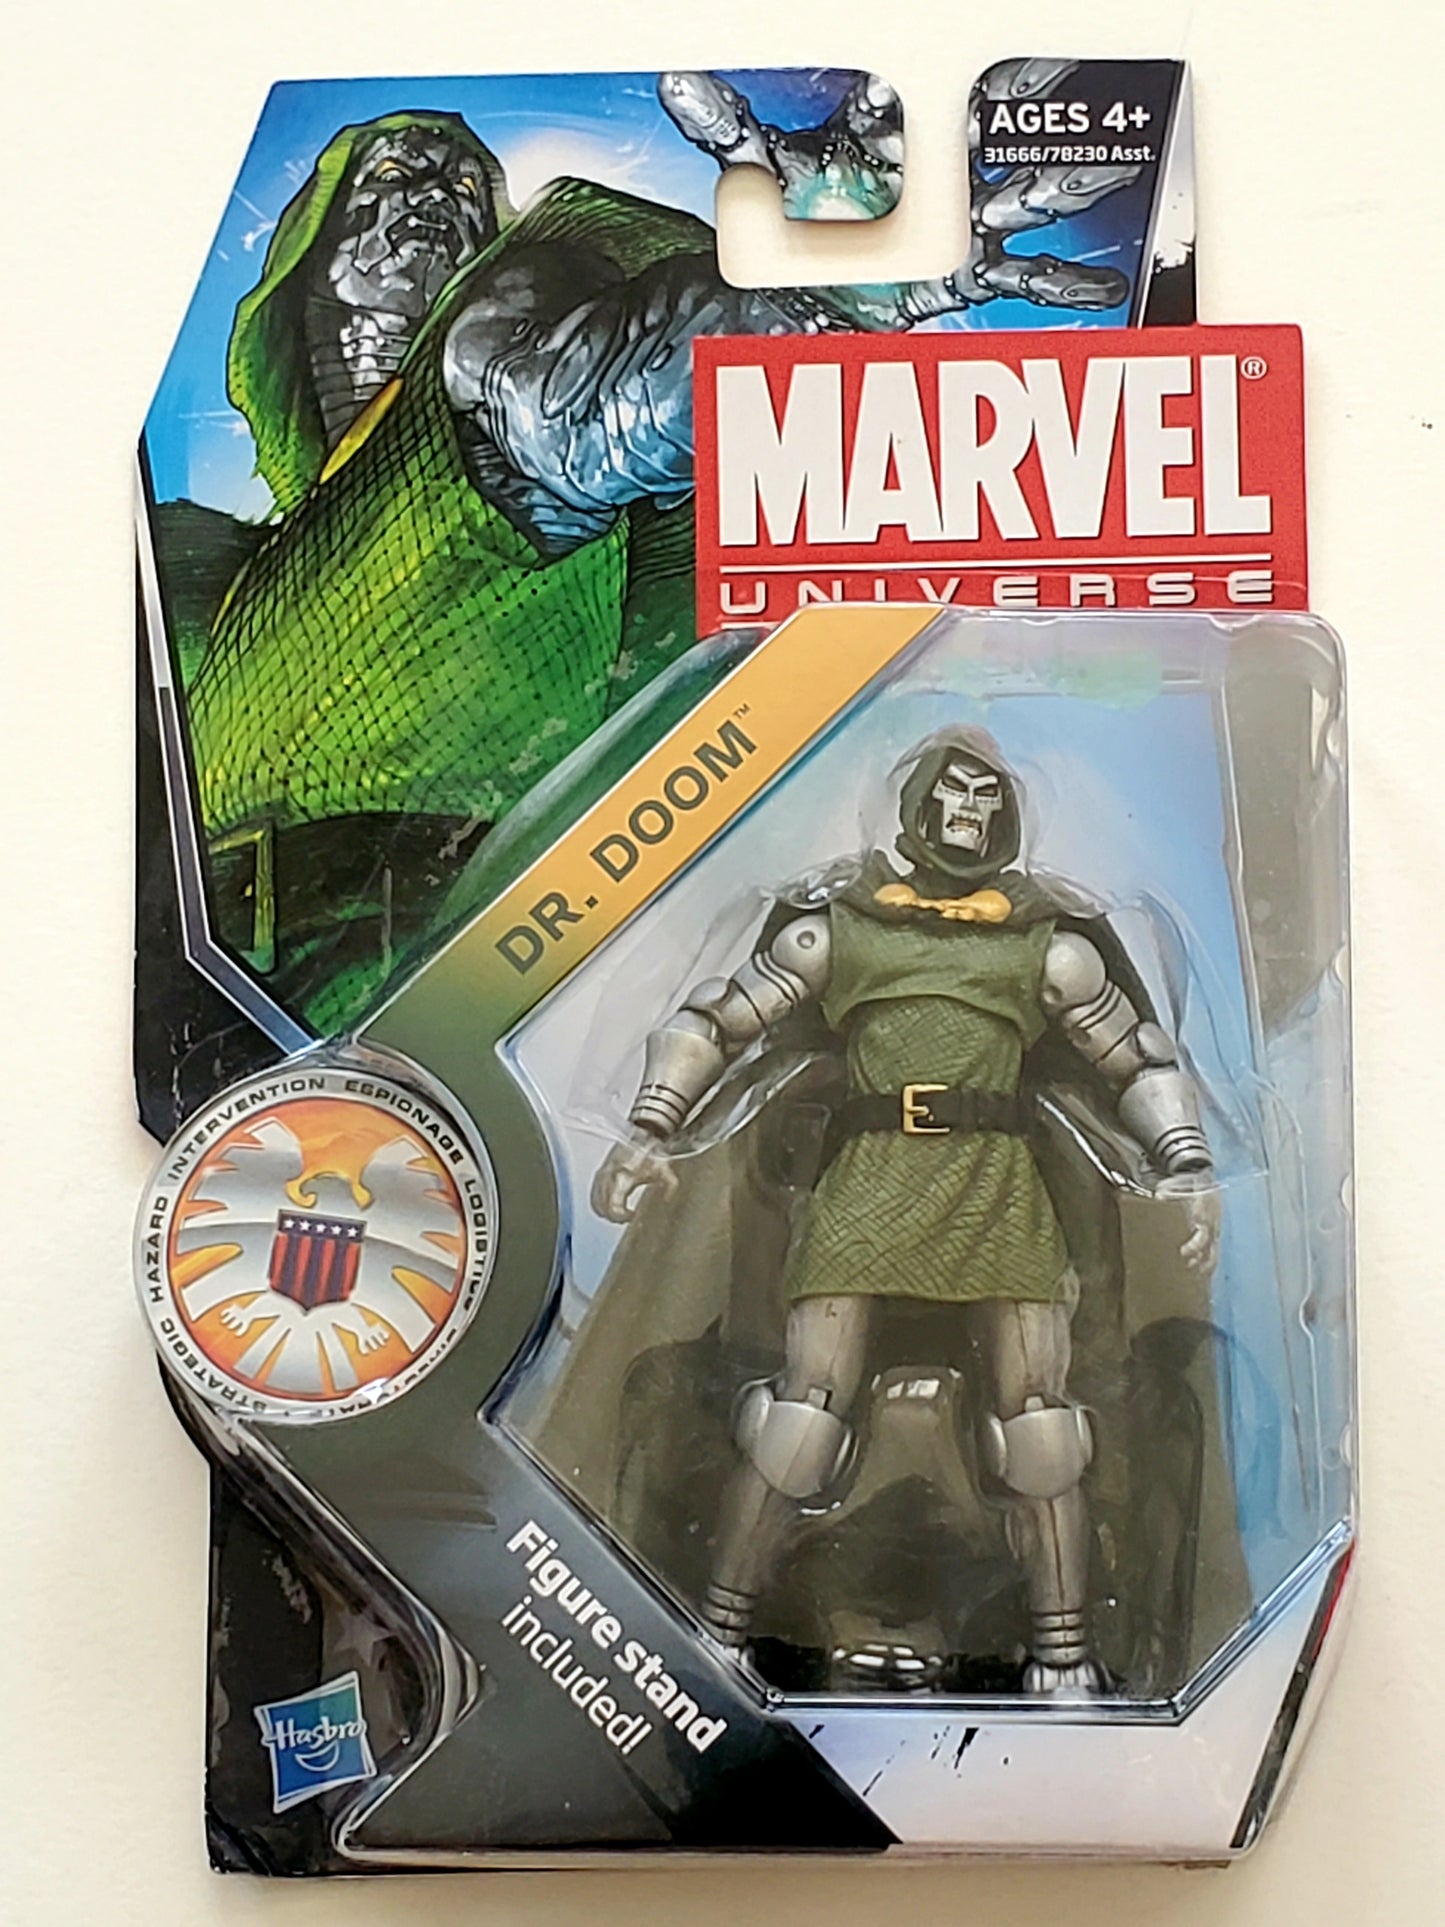 Marvel Universe Series 3 Figure 15 Dr. Doom 3.75-Inch Action Figure